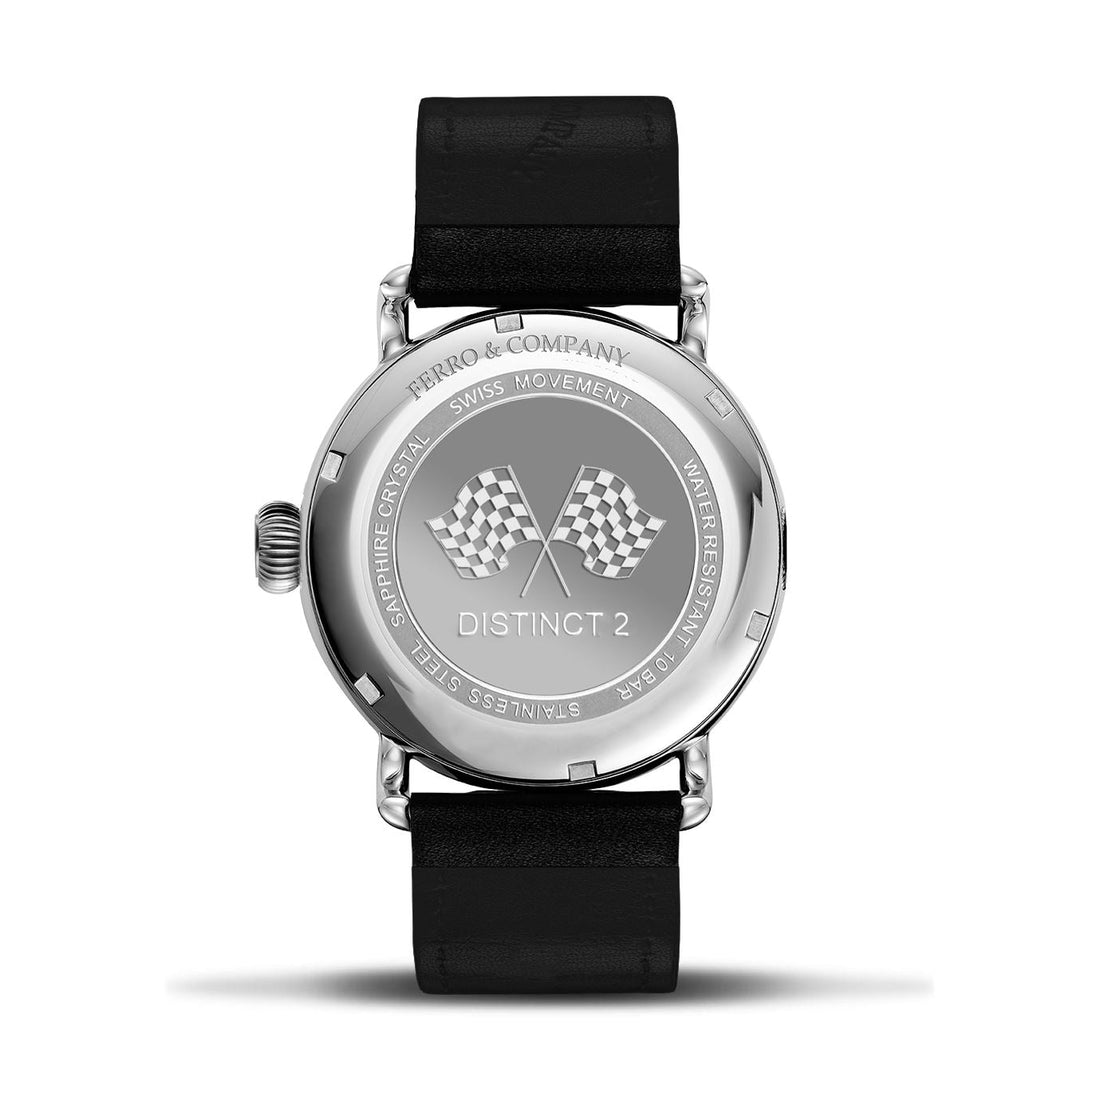 Ferro Watches Distinct 2 Vintage Style Race One Hand Watch Black - Ferro & Company Watches